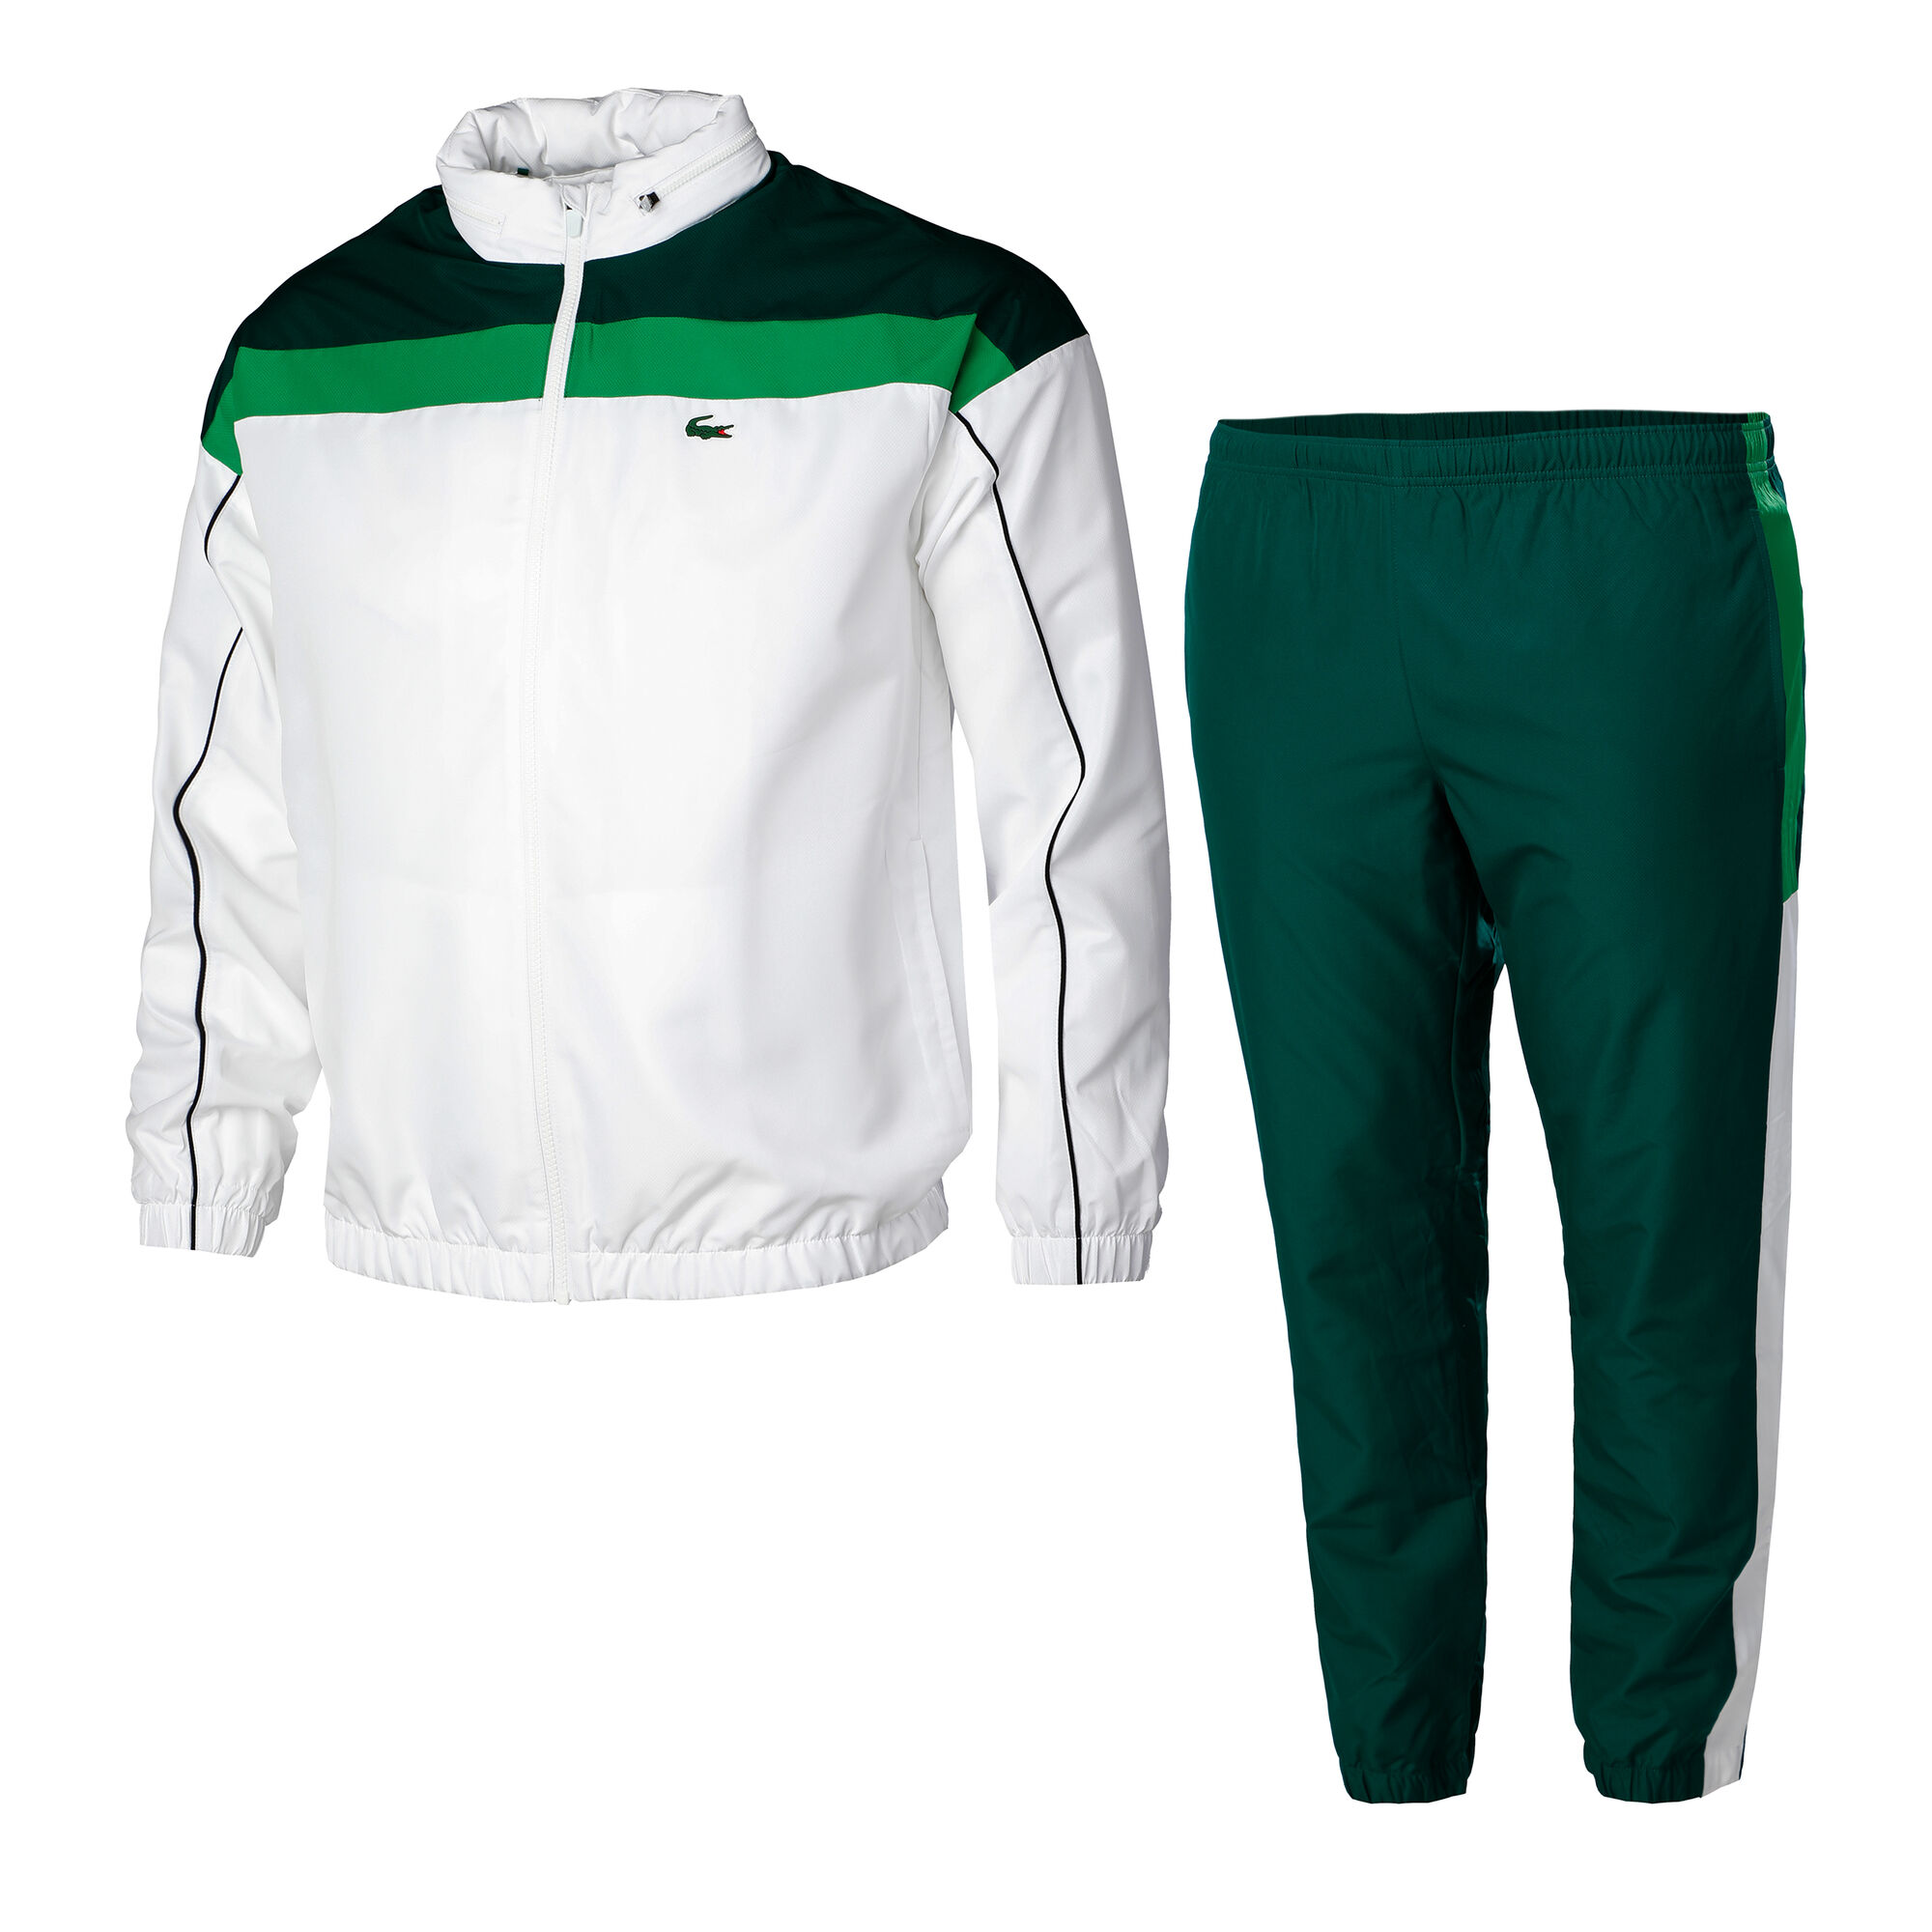 Feasibility Recreation surplus buy Lacoste Tracksuit Men - Green, White online | Tennis-Point